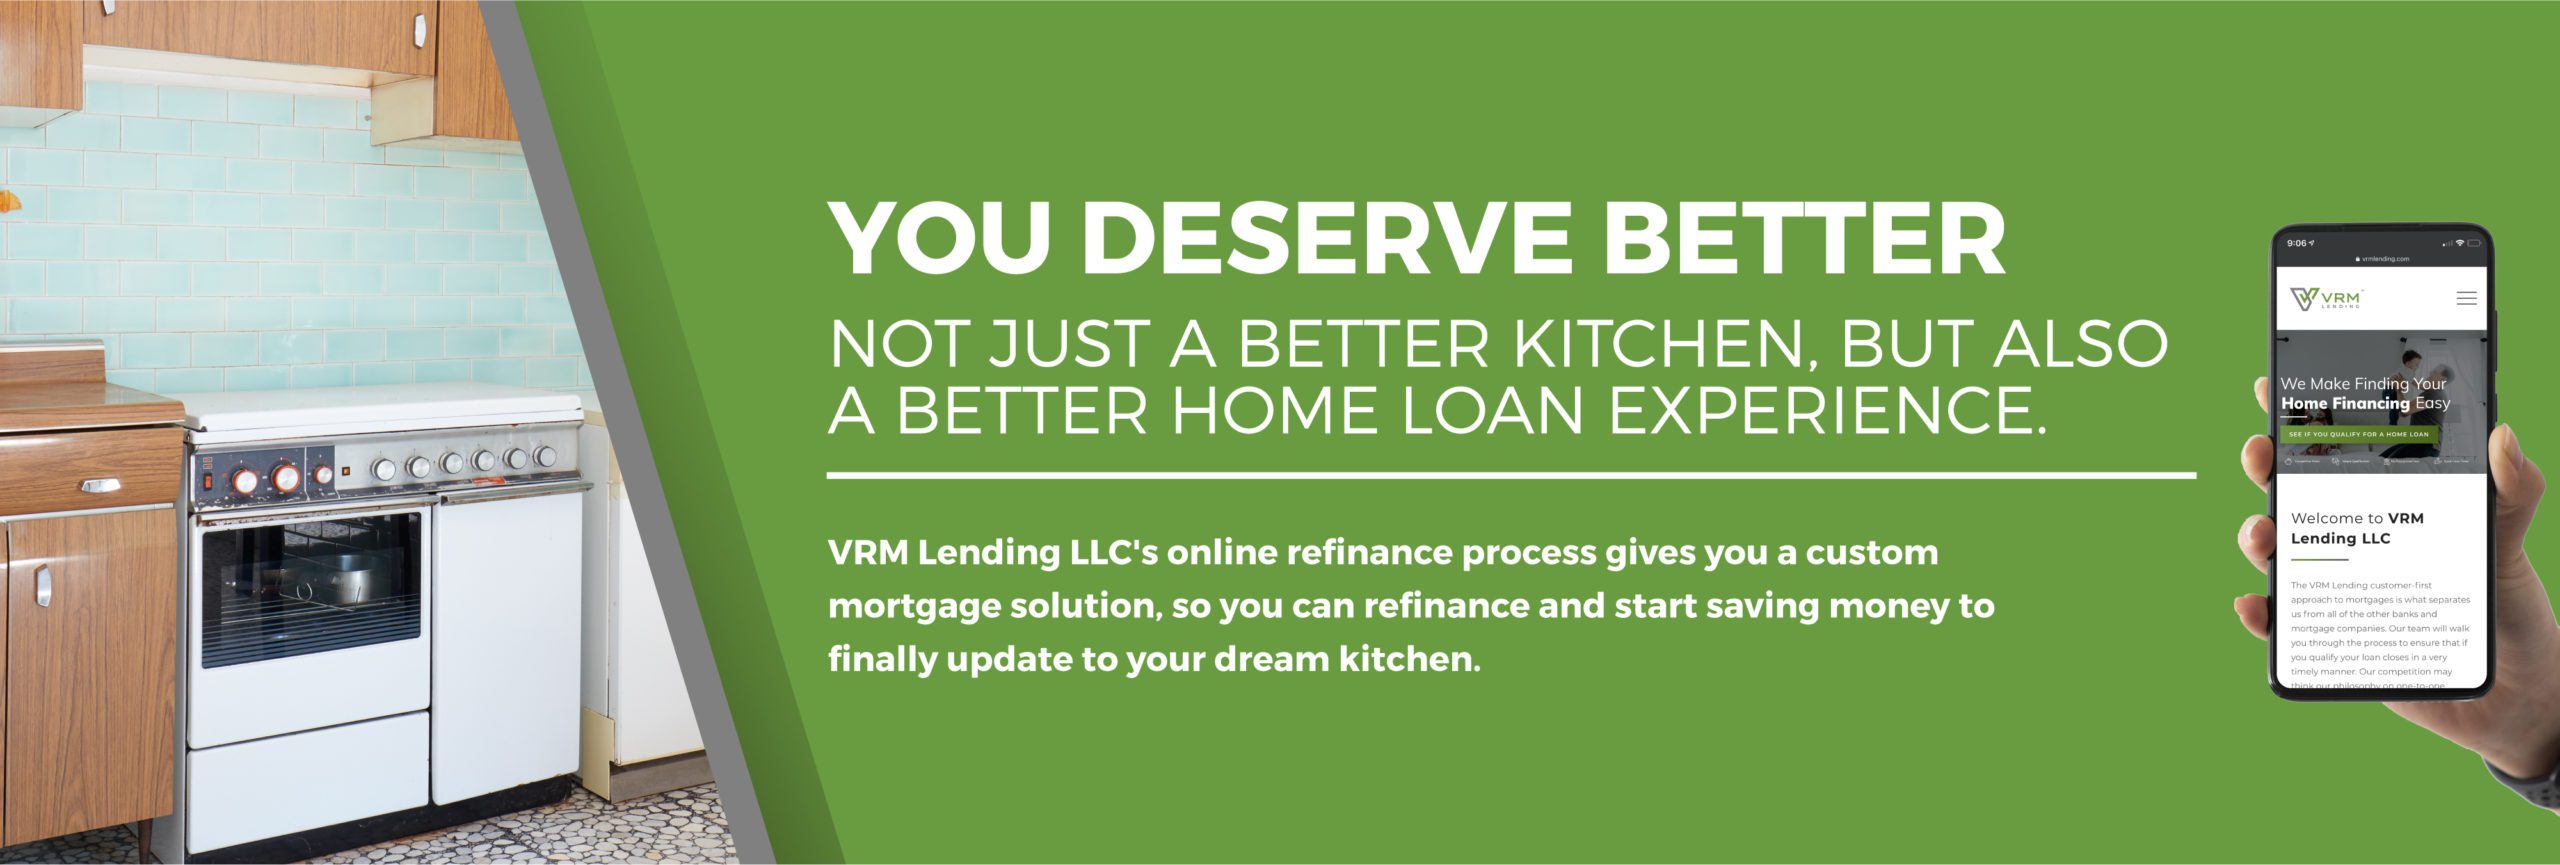 VRM Lending LLC Refinance | VRM Lending LLC | Home Financing Made Easy